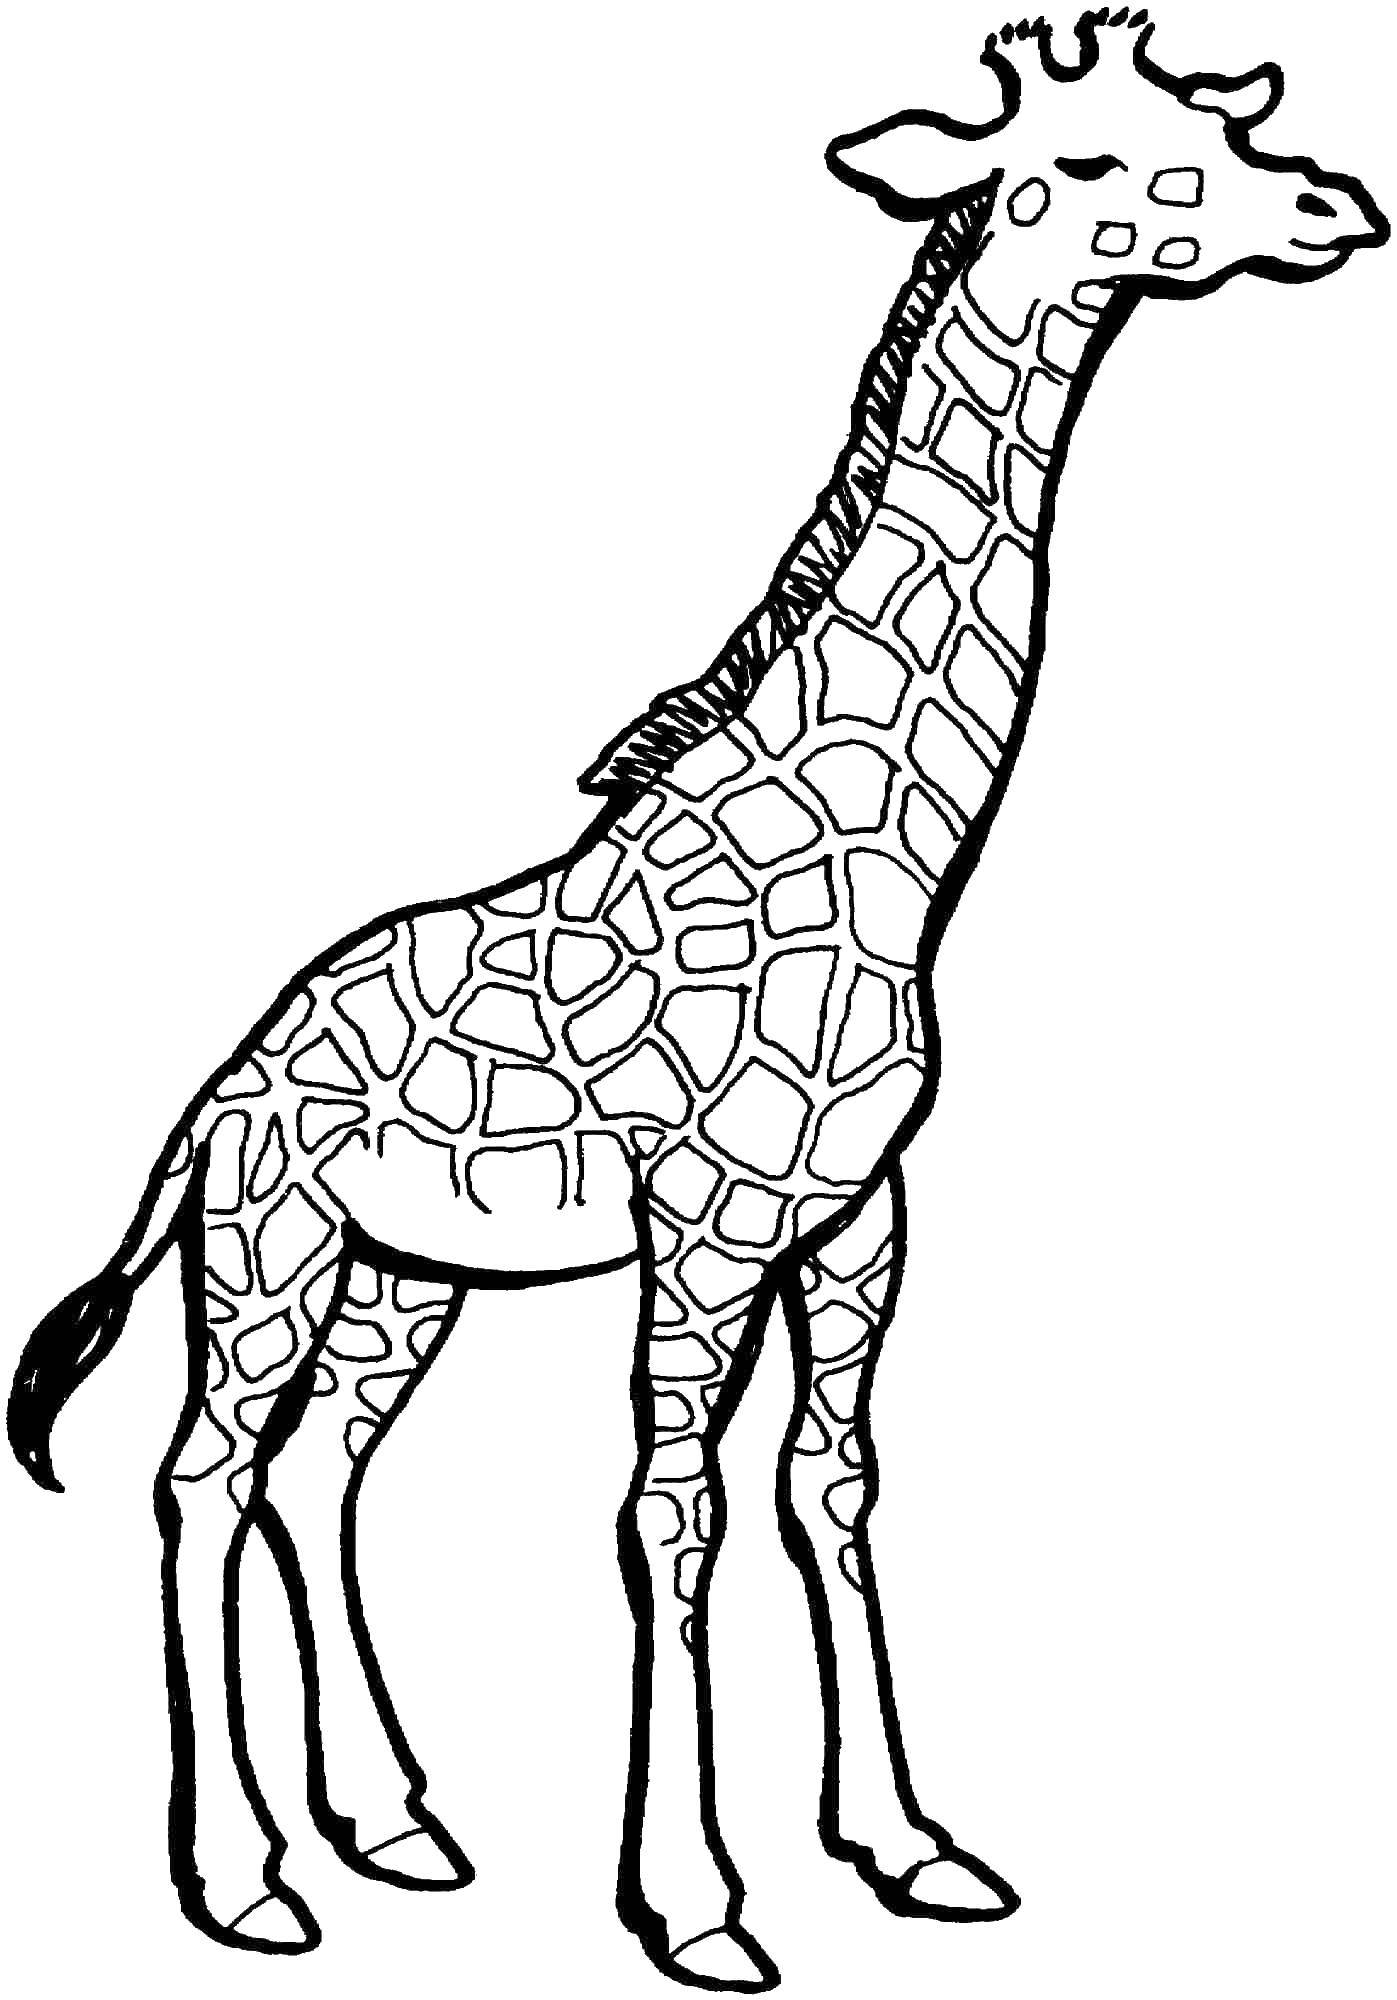 Coloring Giraffe. Category animals. Tags:  animals, giraffe.